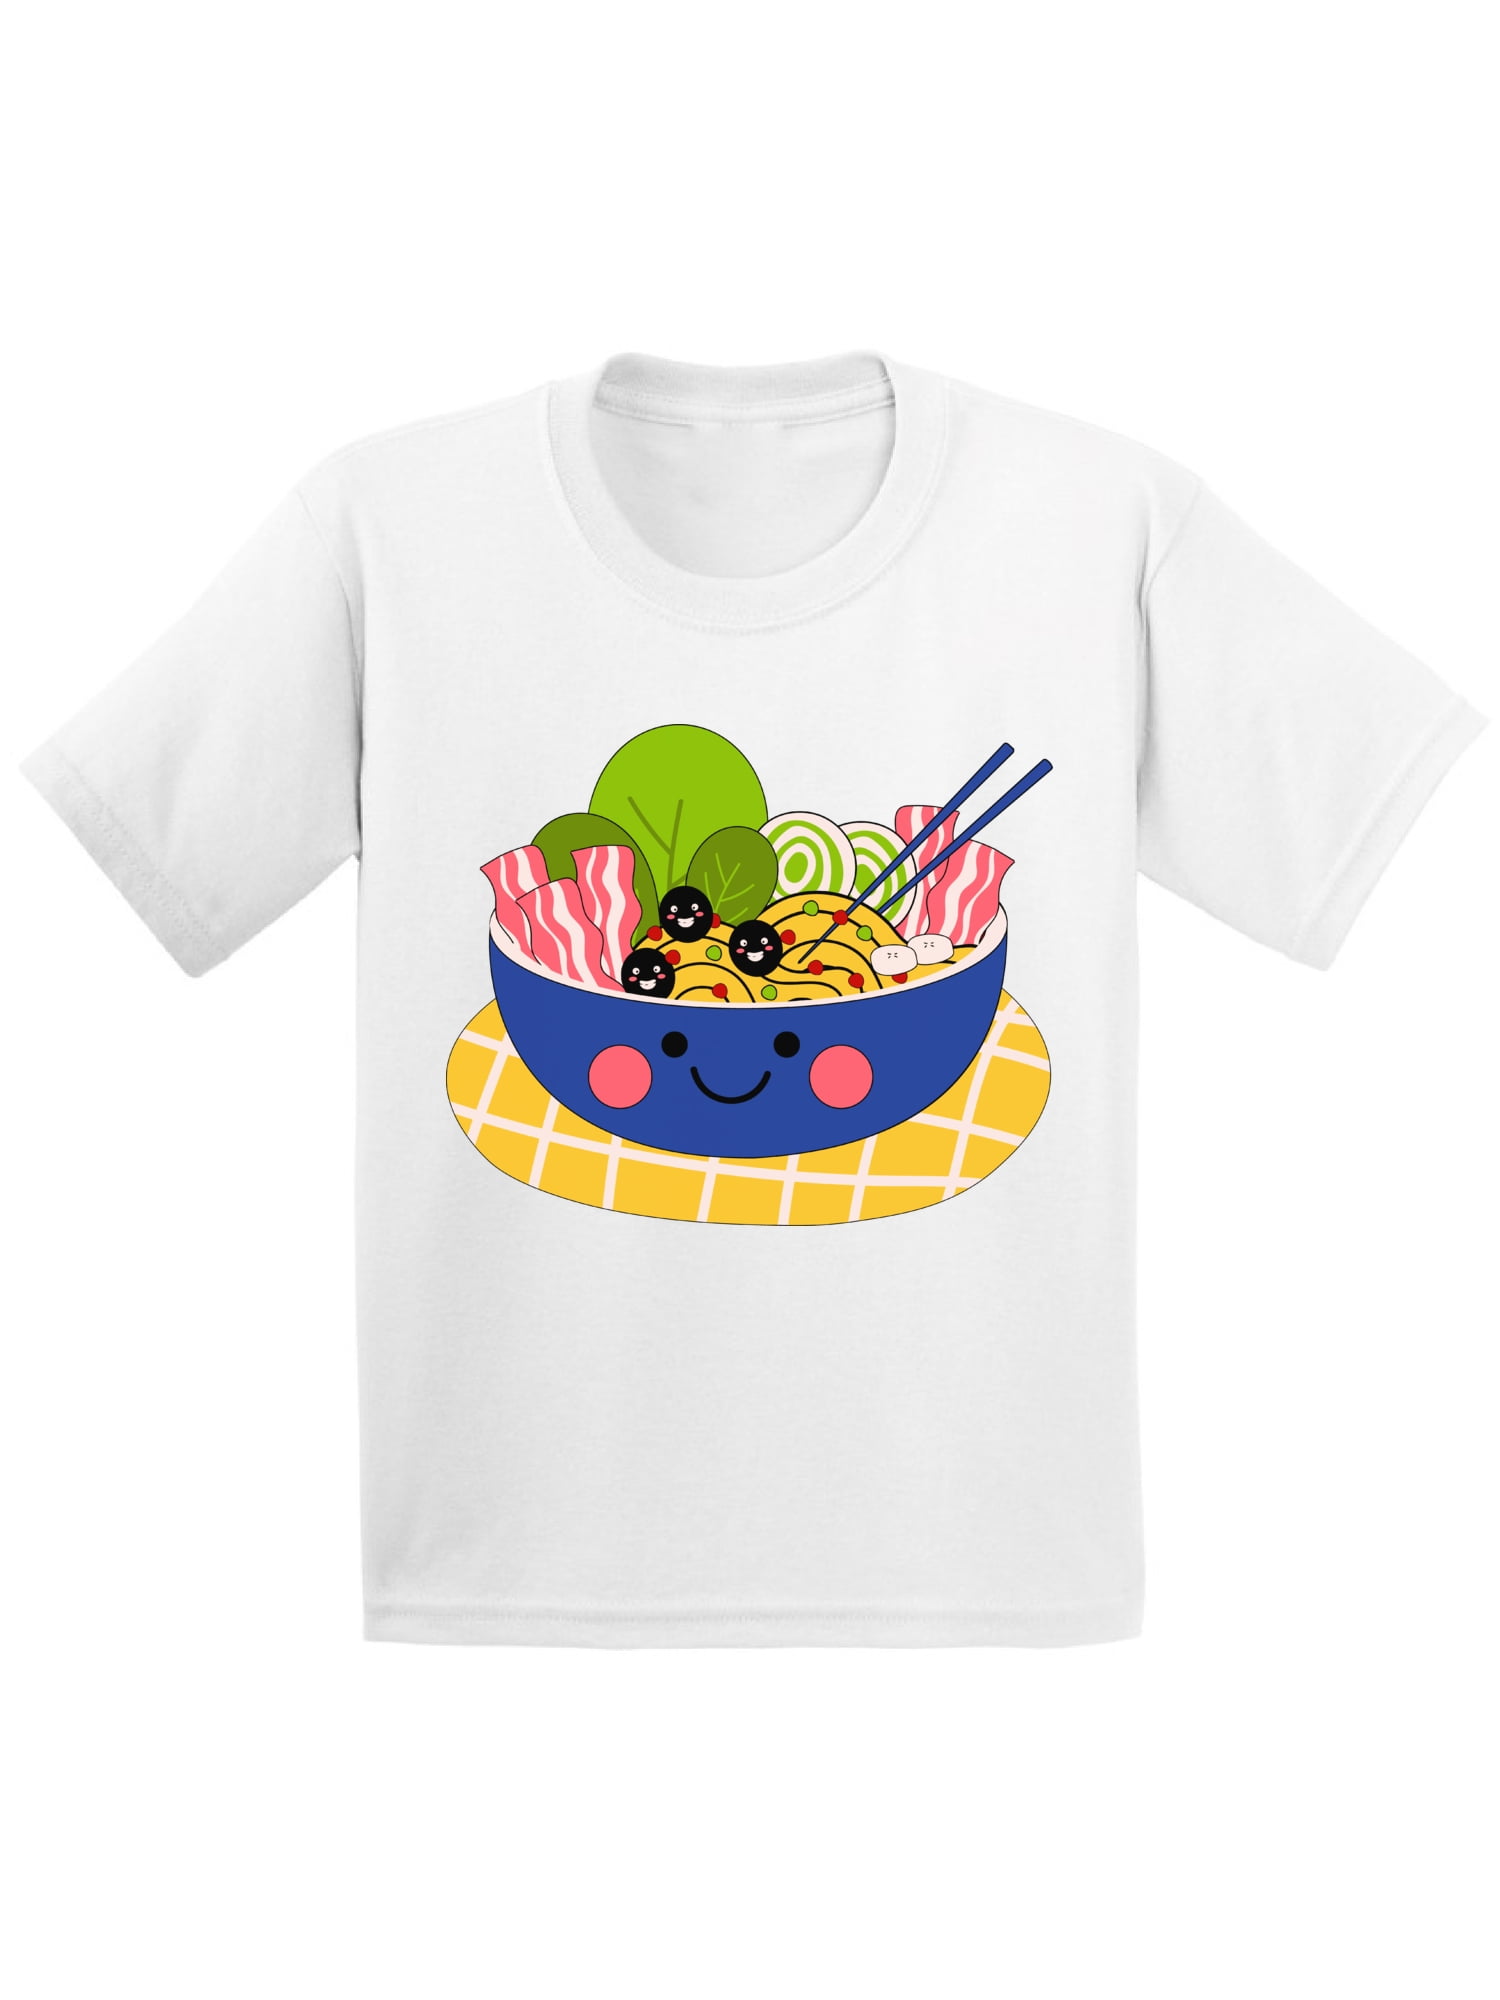 Boys Graphic Tees Bento Box Japanese Shirt 2t 3t 4t 5 6t Walmart Com